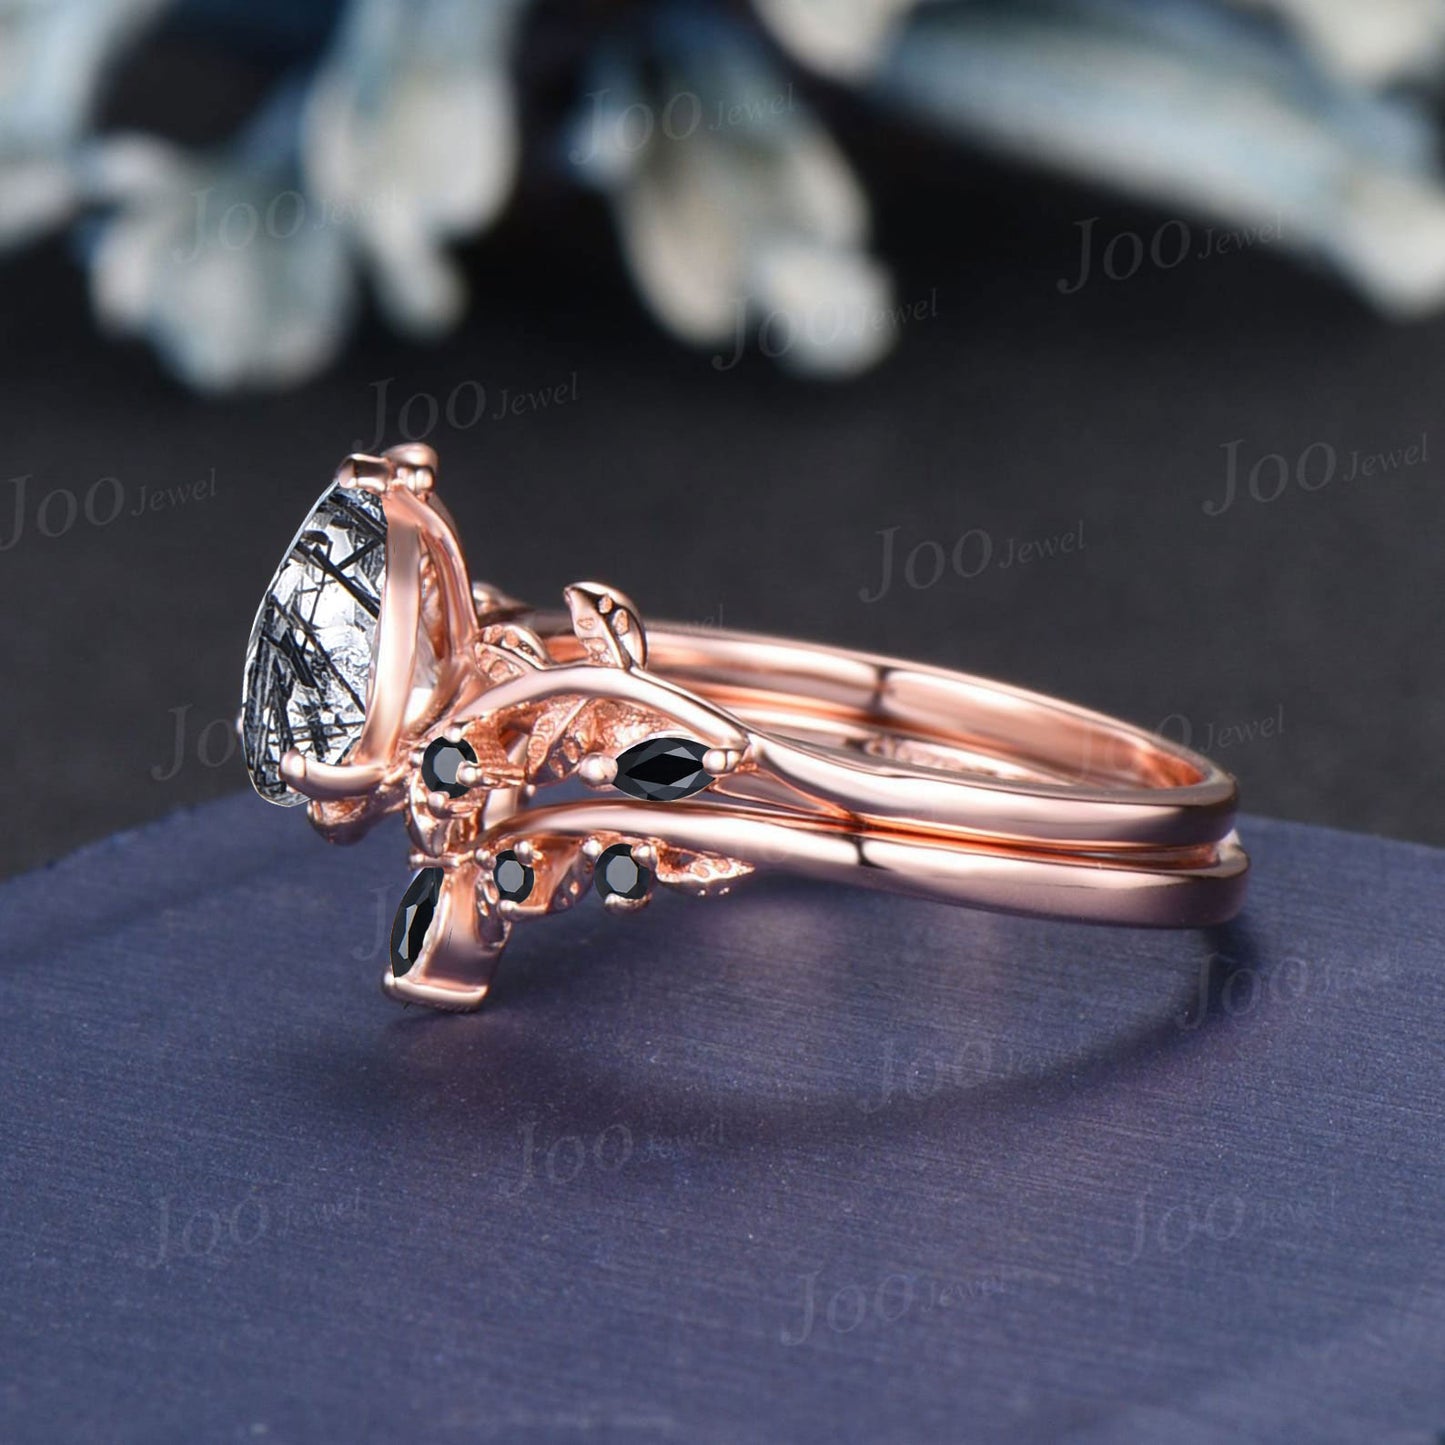 Antique Natural Black Rutilated Quartz Pear Engagement Ring Leaf Nature Inspired Black Spinel Diamond Ring Women Art Deco Black Promise Ring